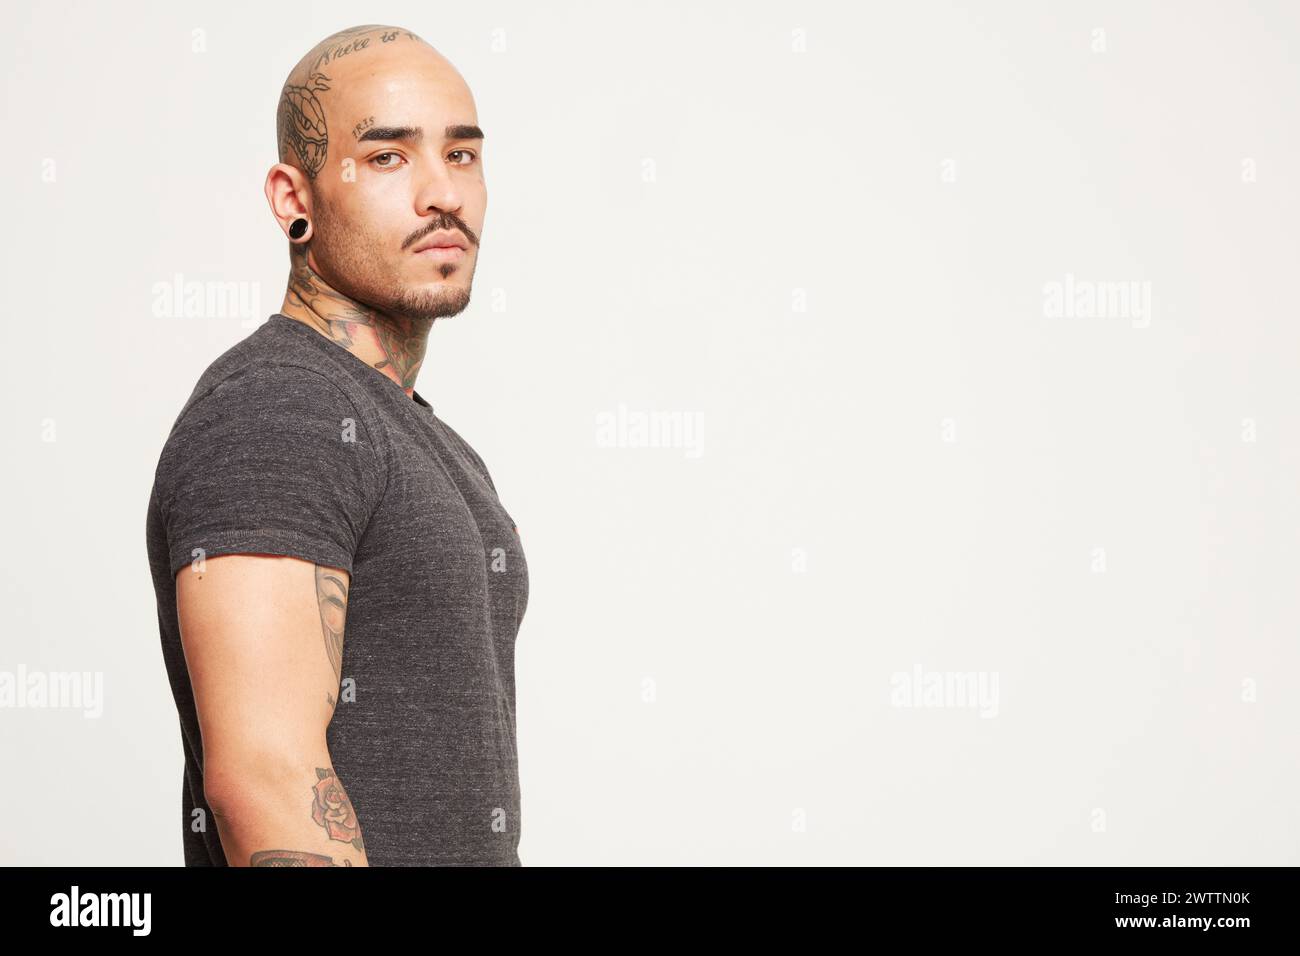 Hombre con tatuajes posando contra un fondo claro Foto de stock